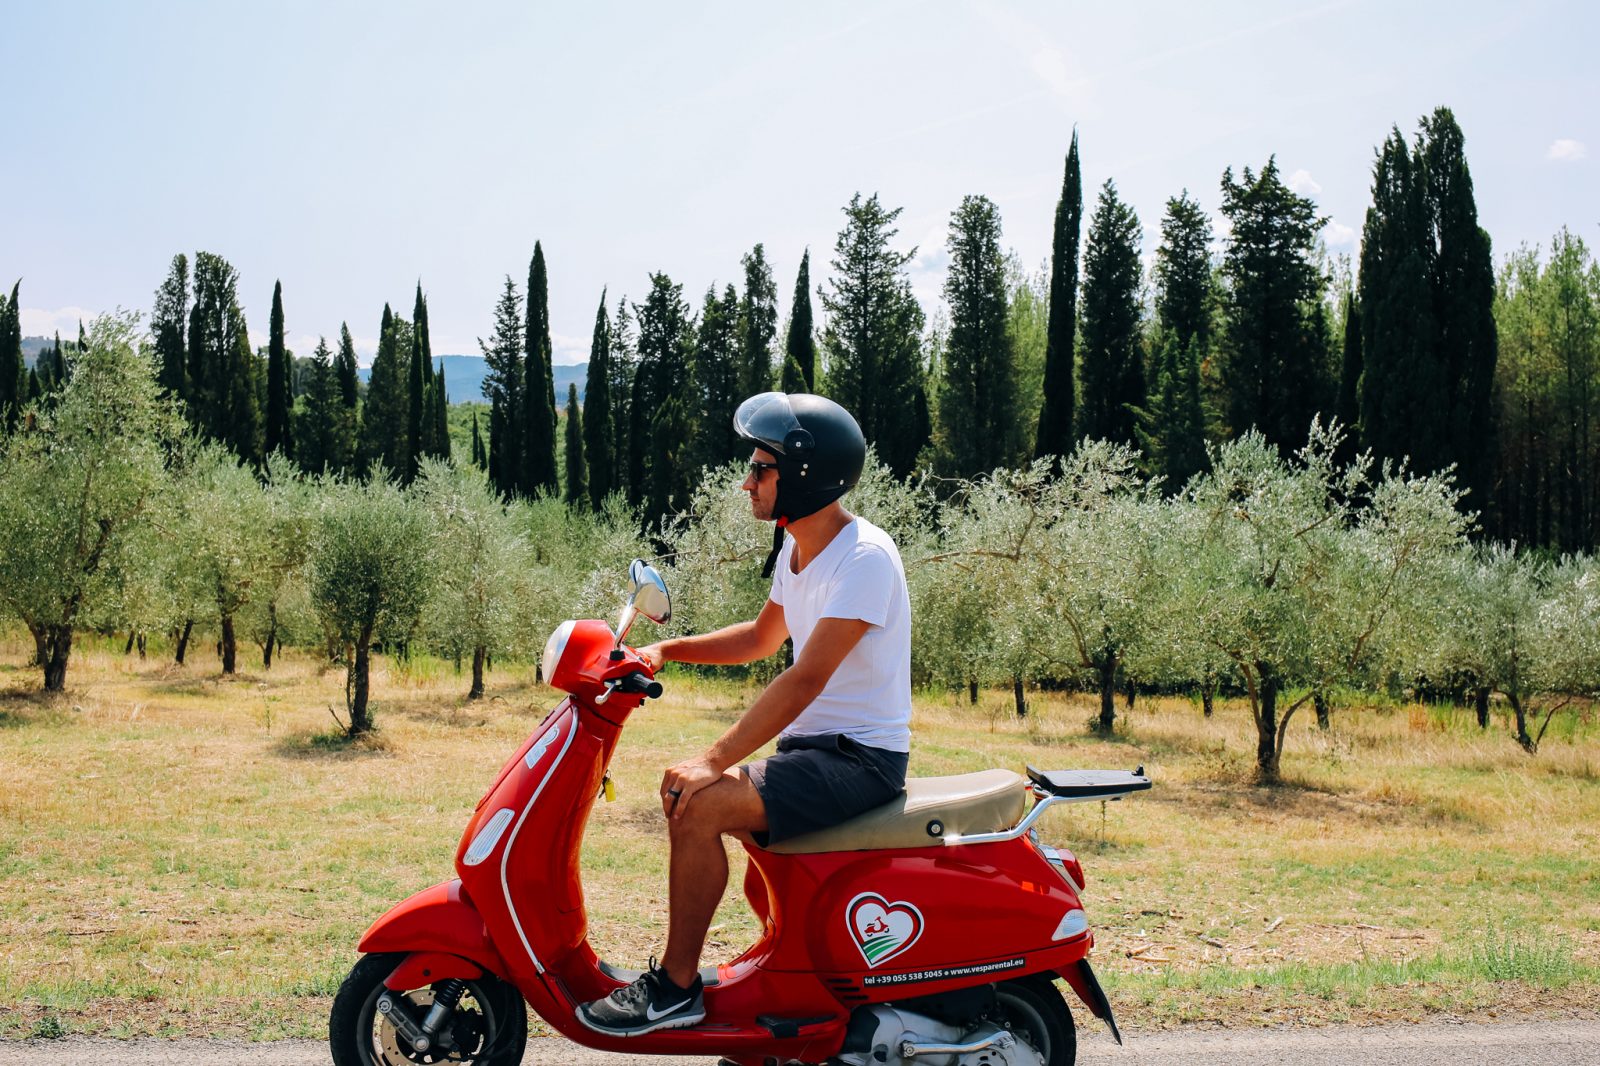 Scooting around Tuscany